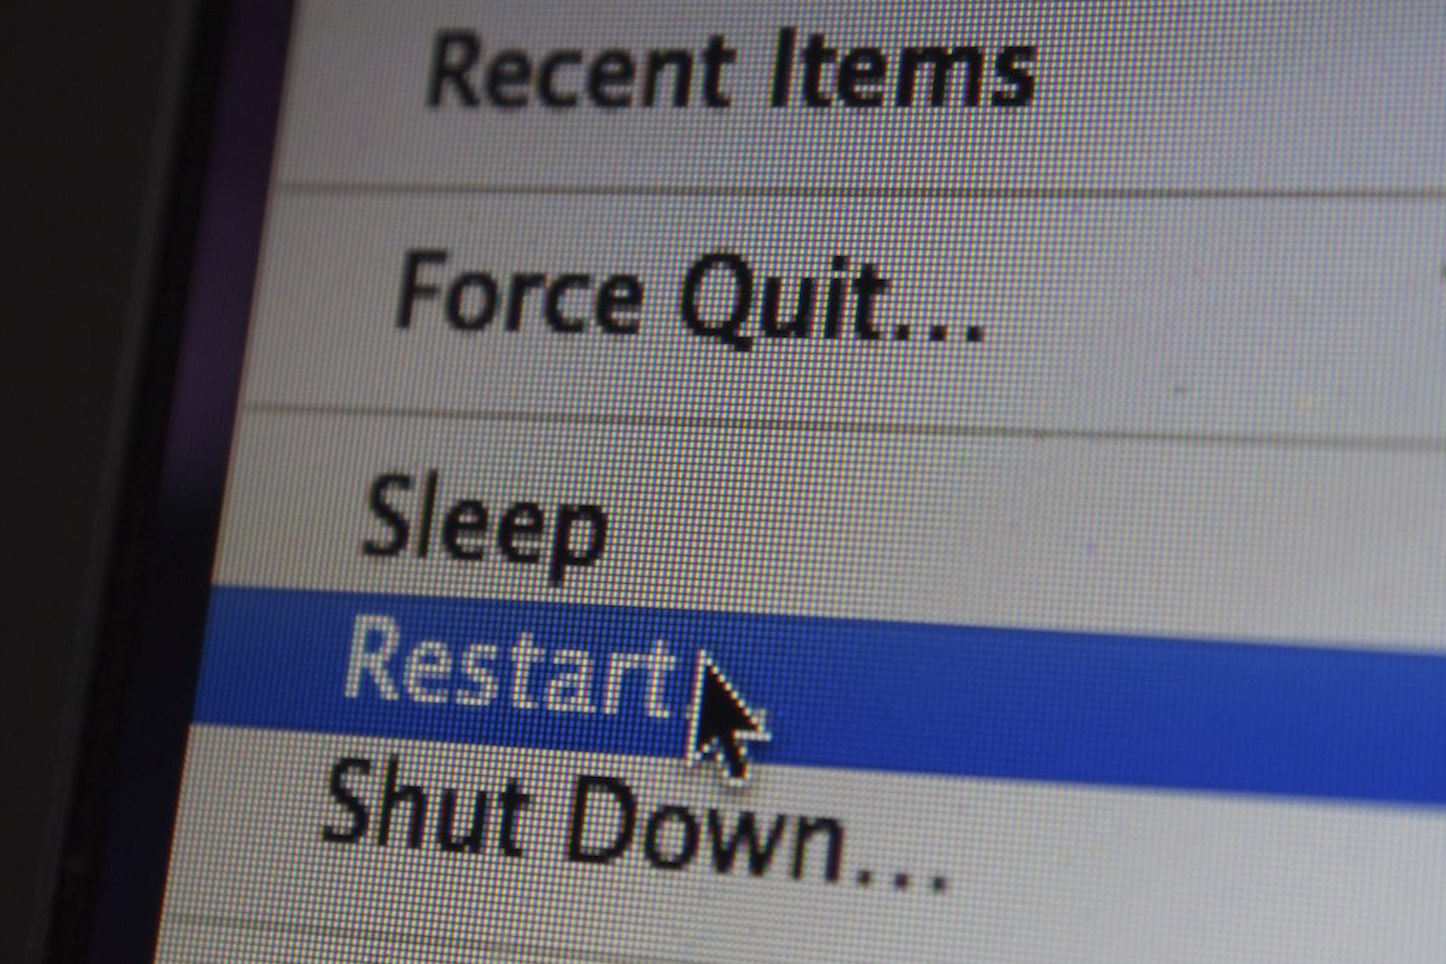 mac-restart.jpg